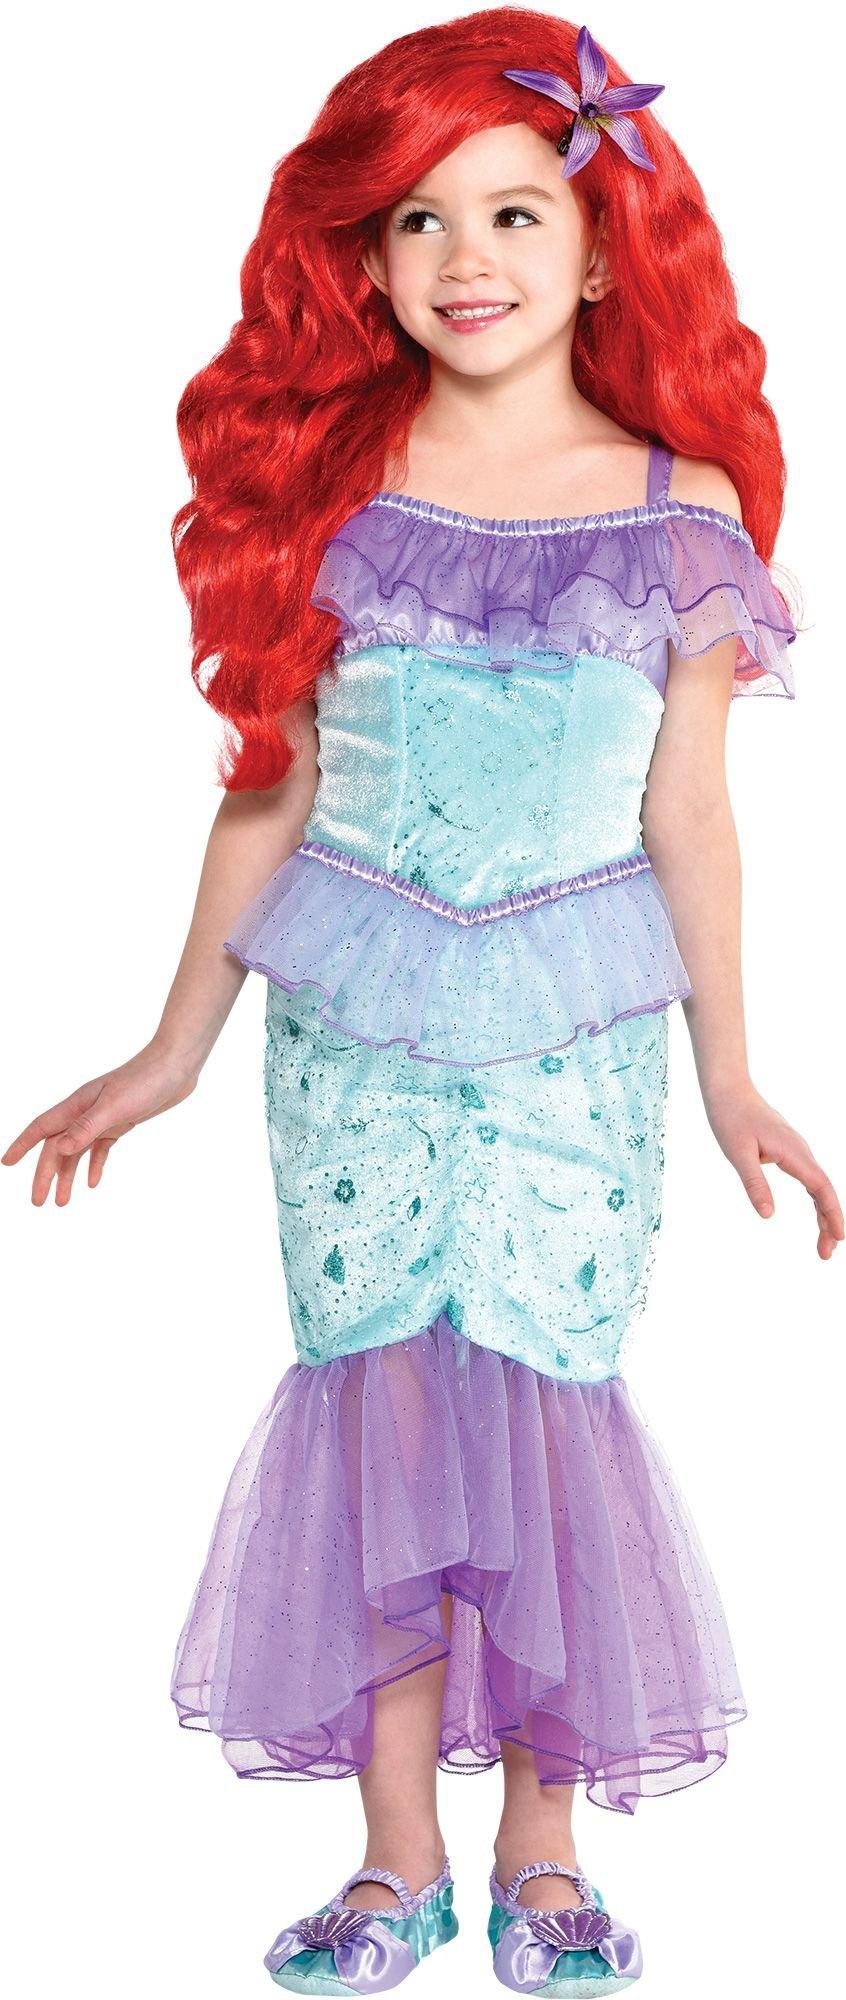 Kids' Ariel Costume - The Little Mermaid